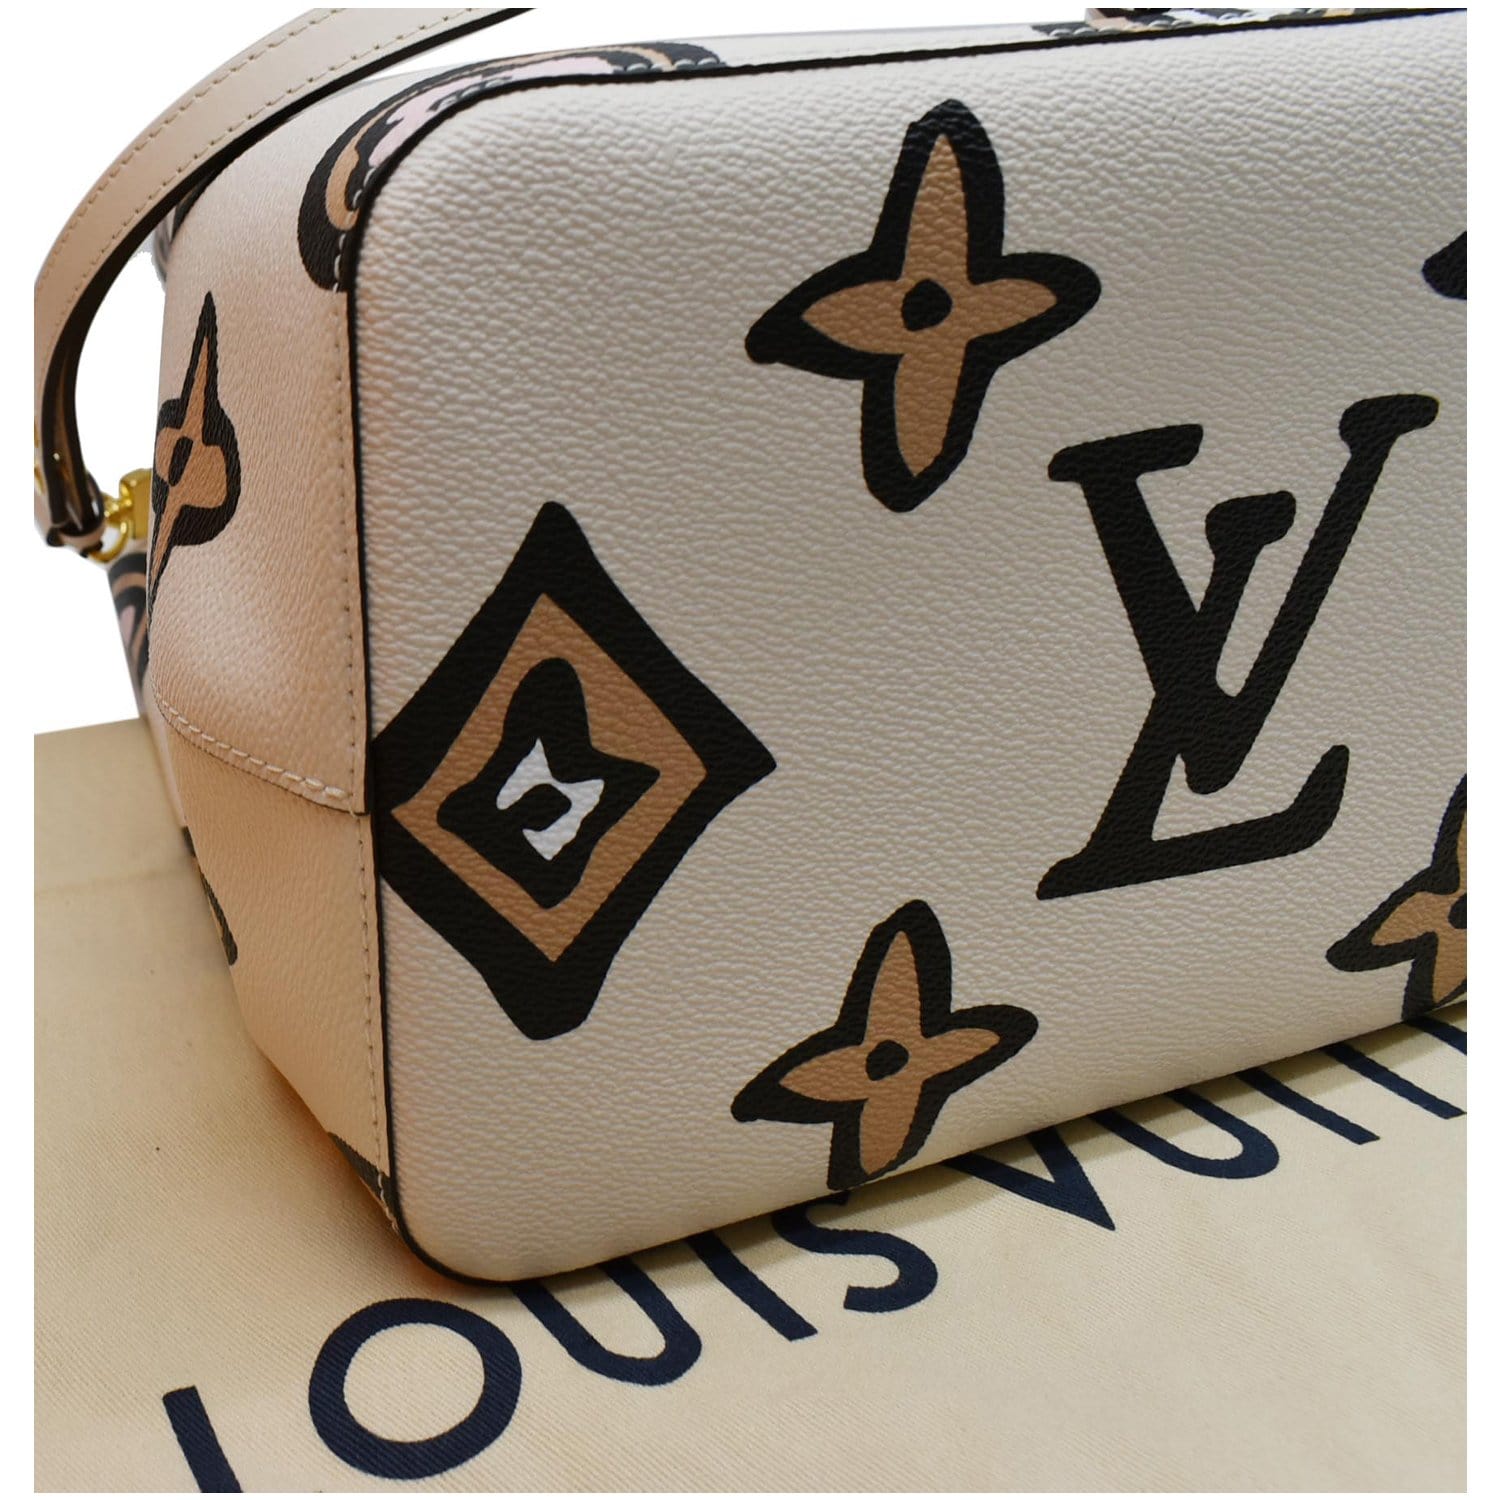 Louis Vuitton 2021 Limited Edition Heart Bag